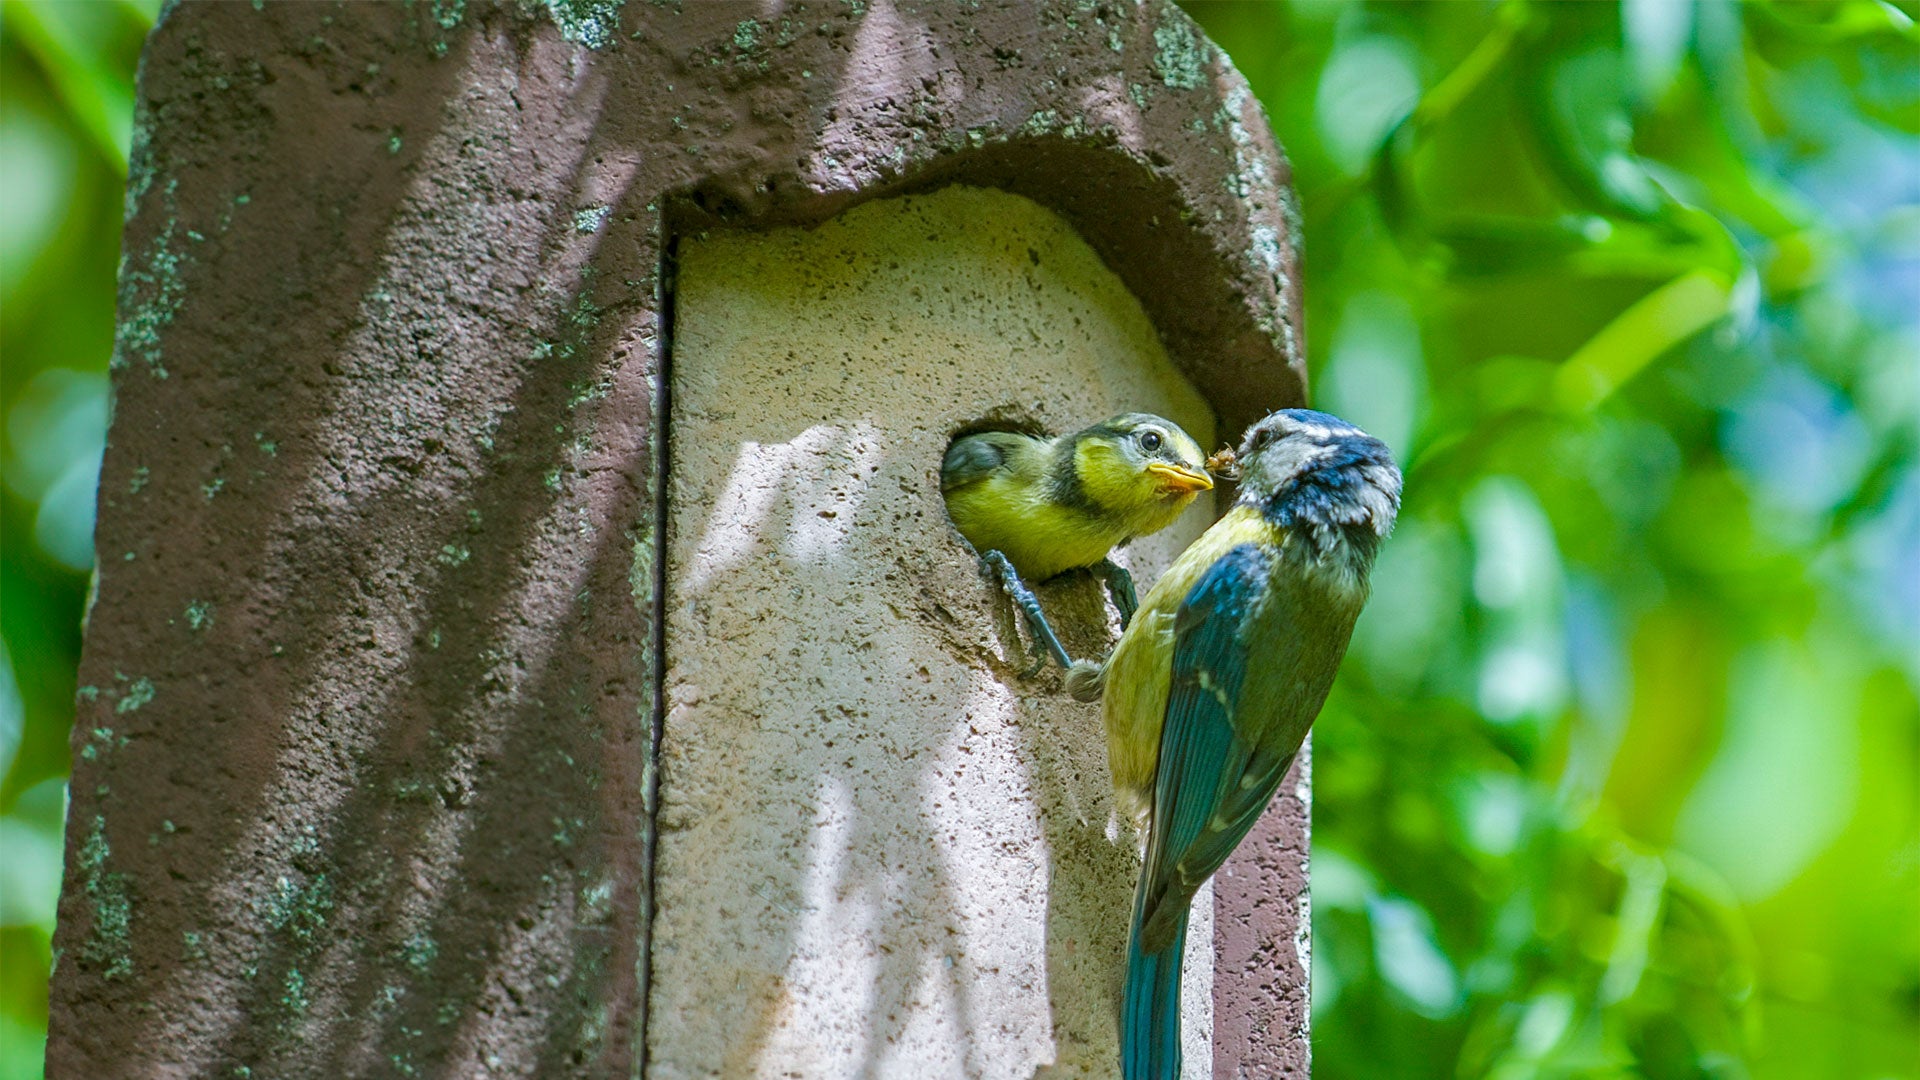 Blue tit feeding fledgling in nest box